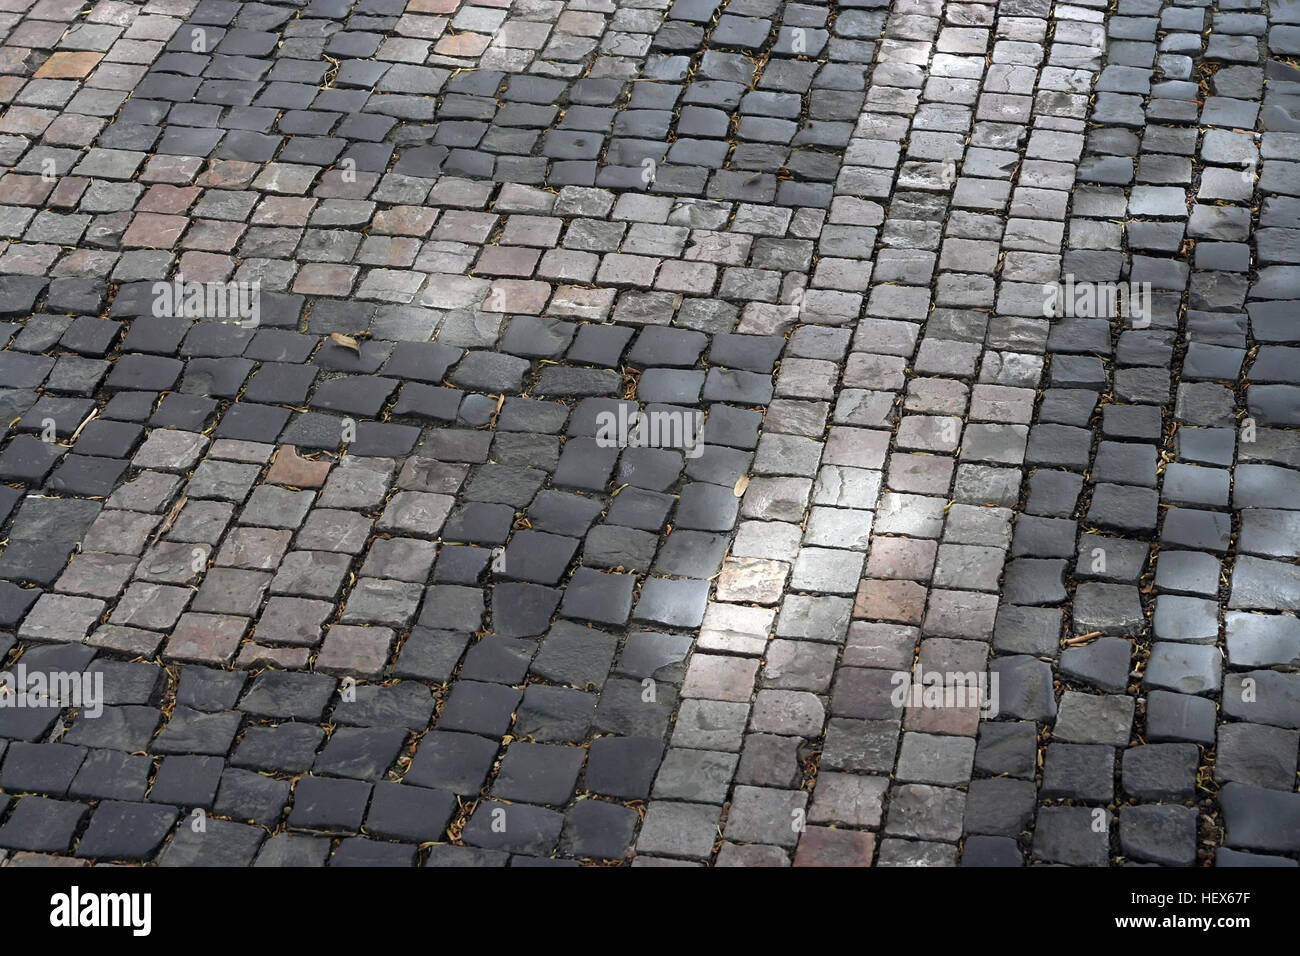 Cobble stone paved street. Cobble stone. Stock Photo